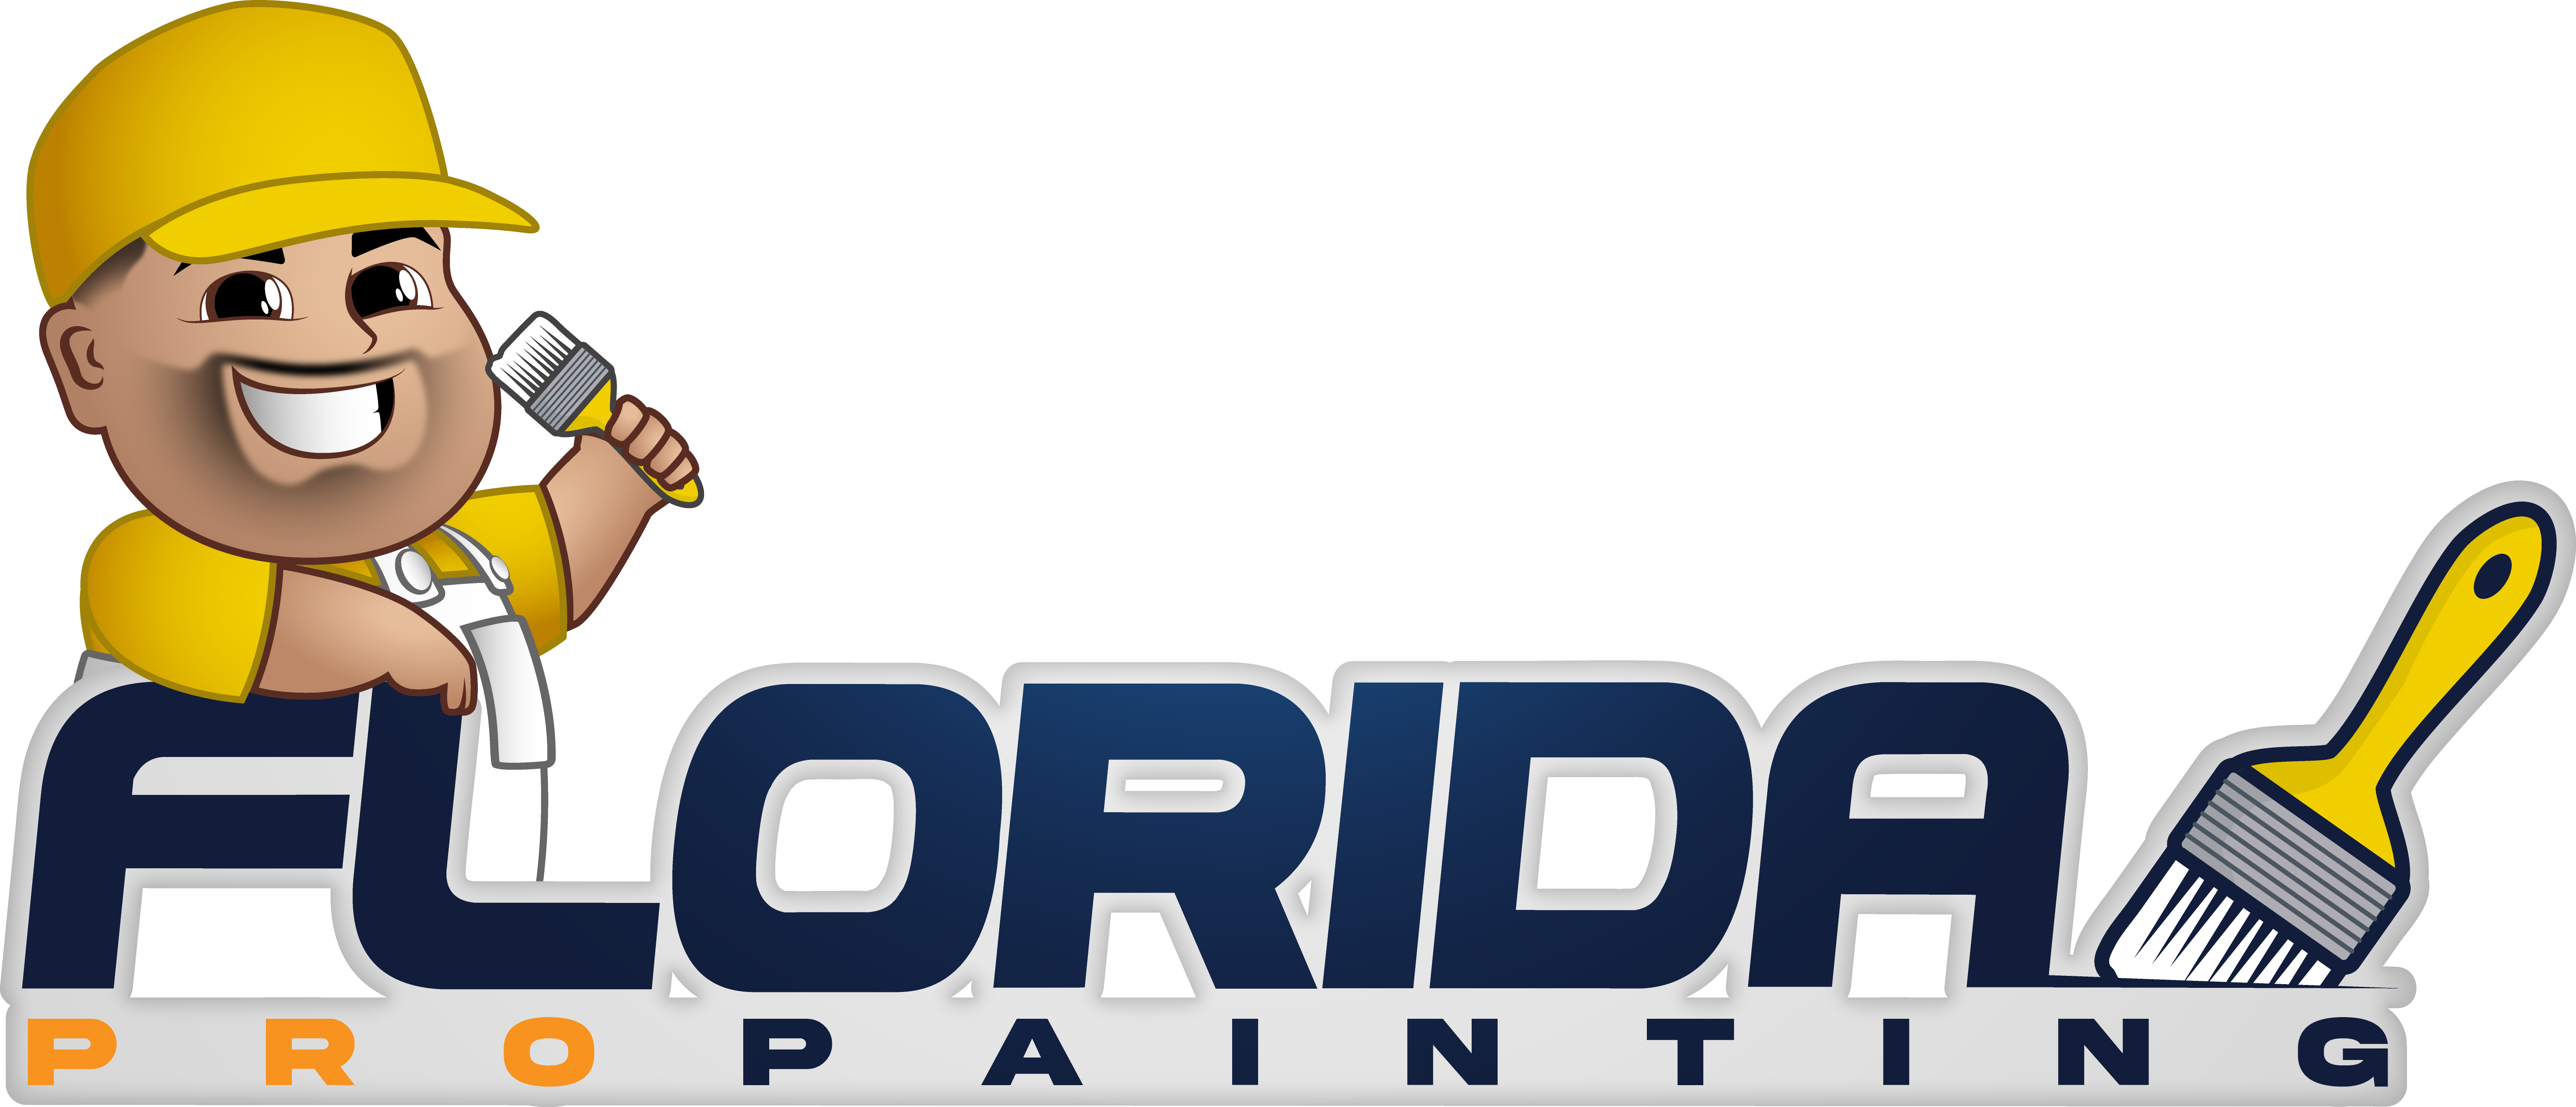 Flavia Painting LLC dba Florida Propainting Logo